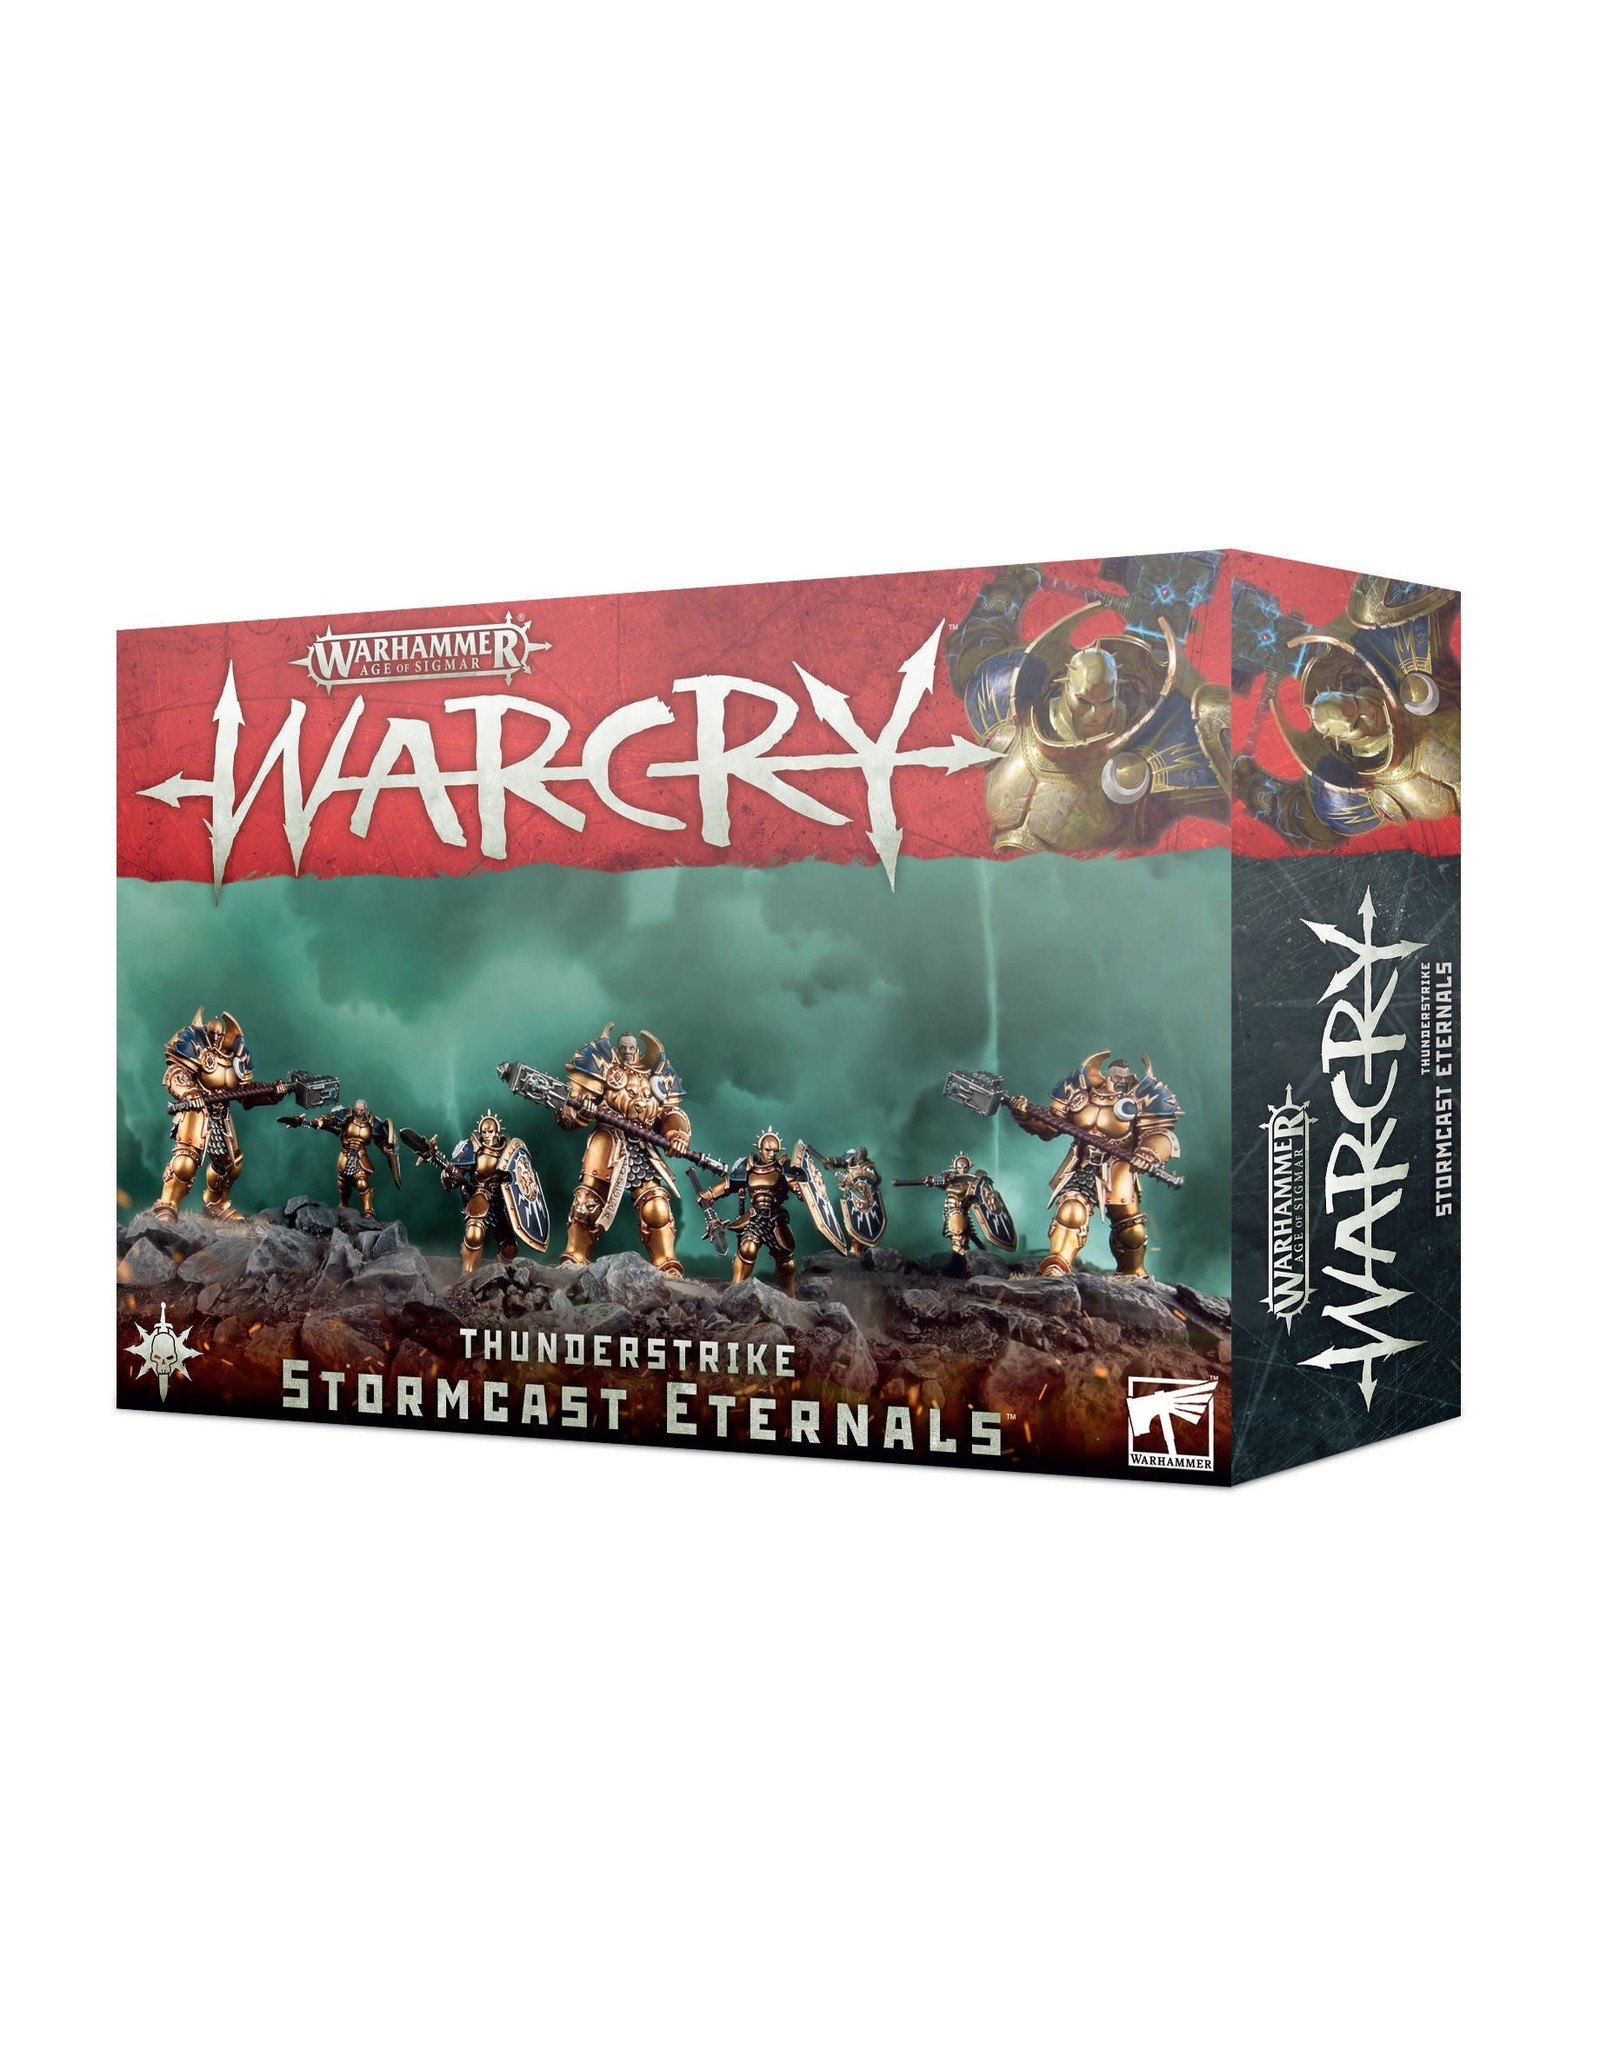 111-82 Warcry Stormcast